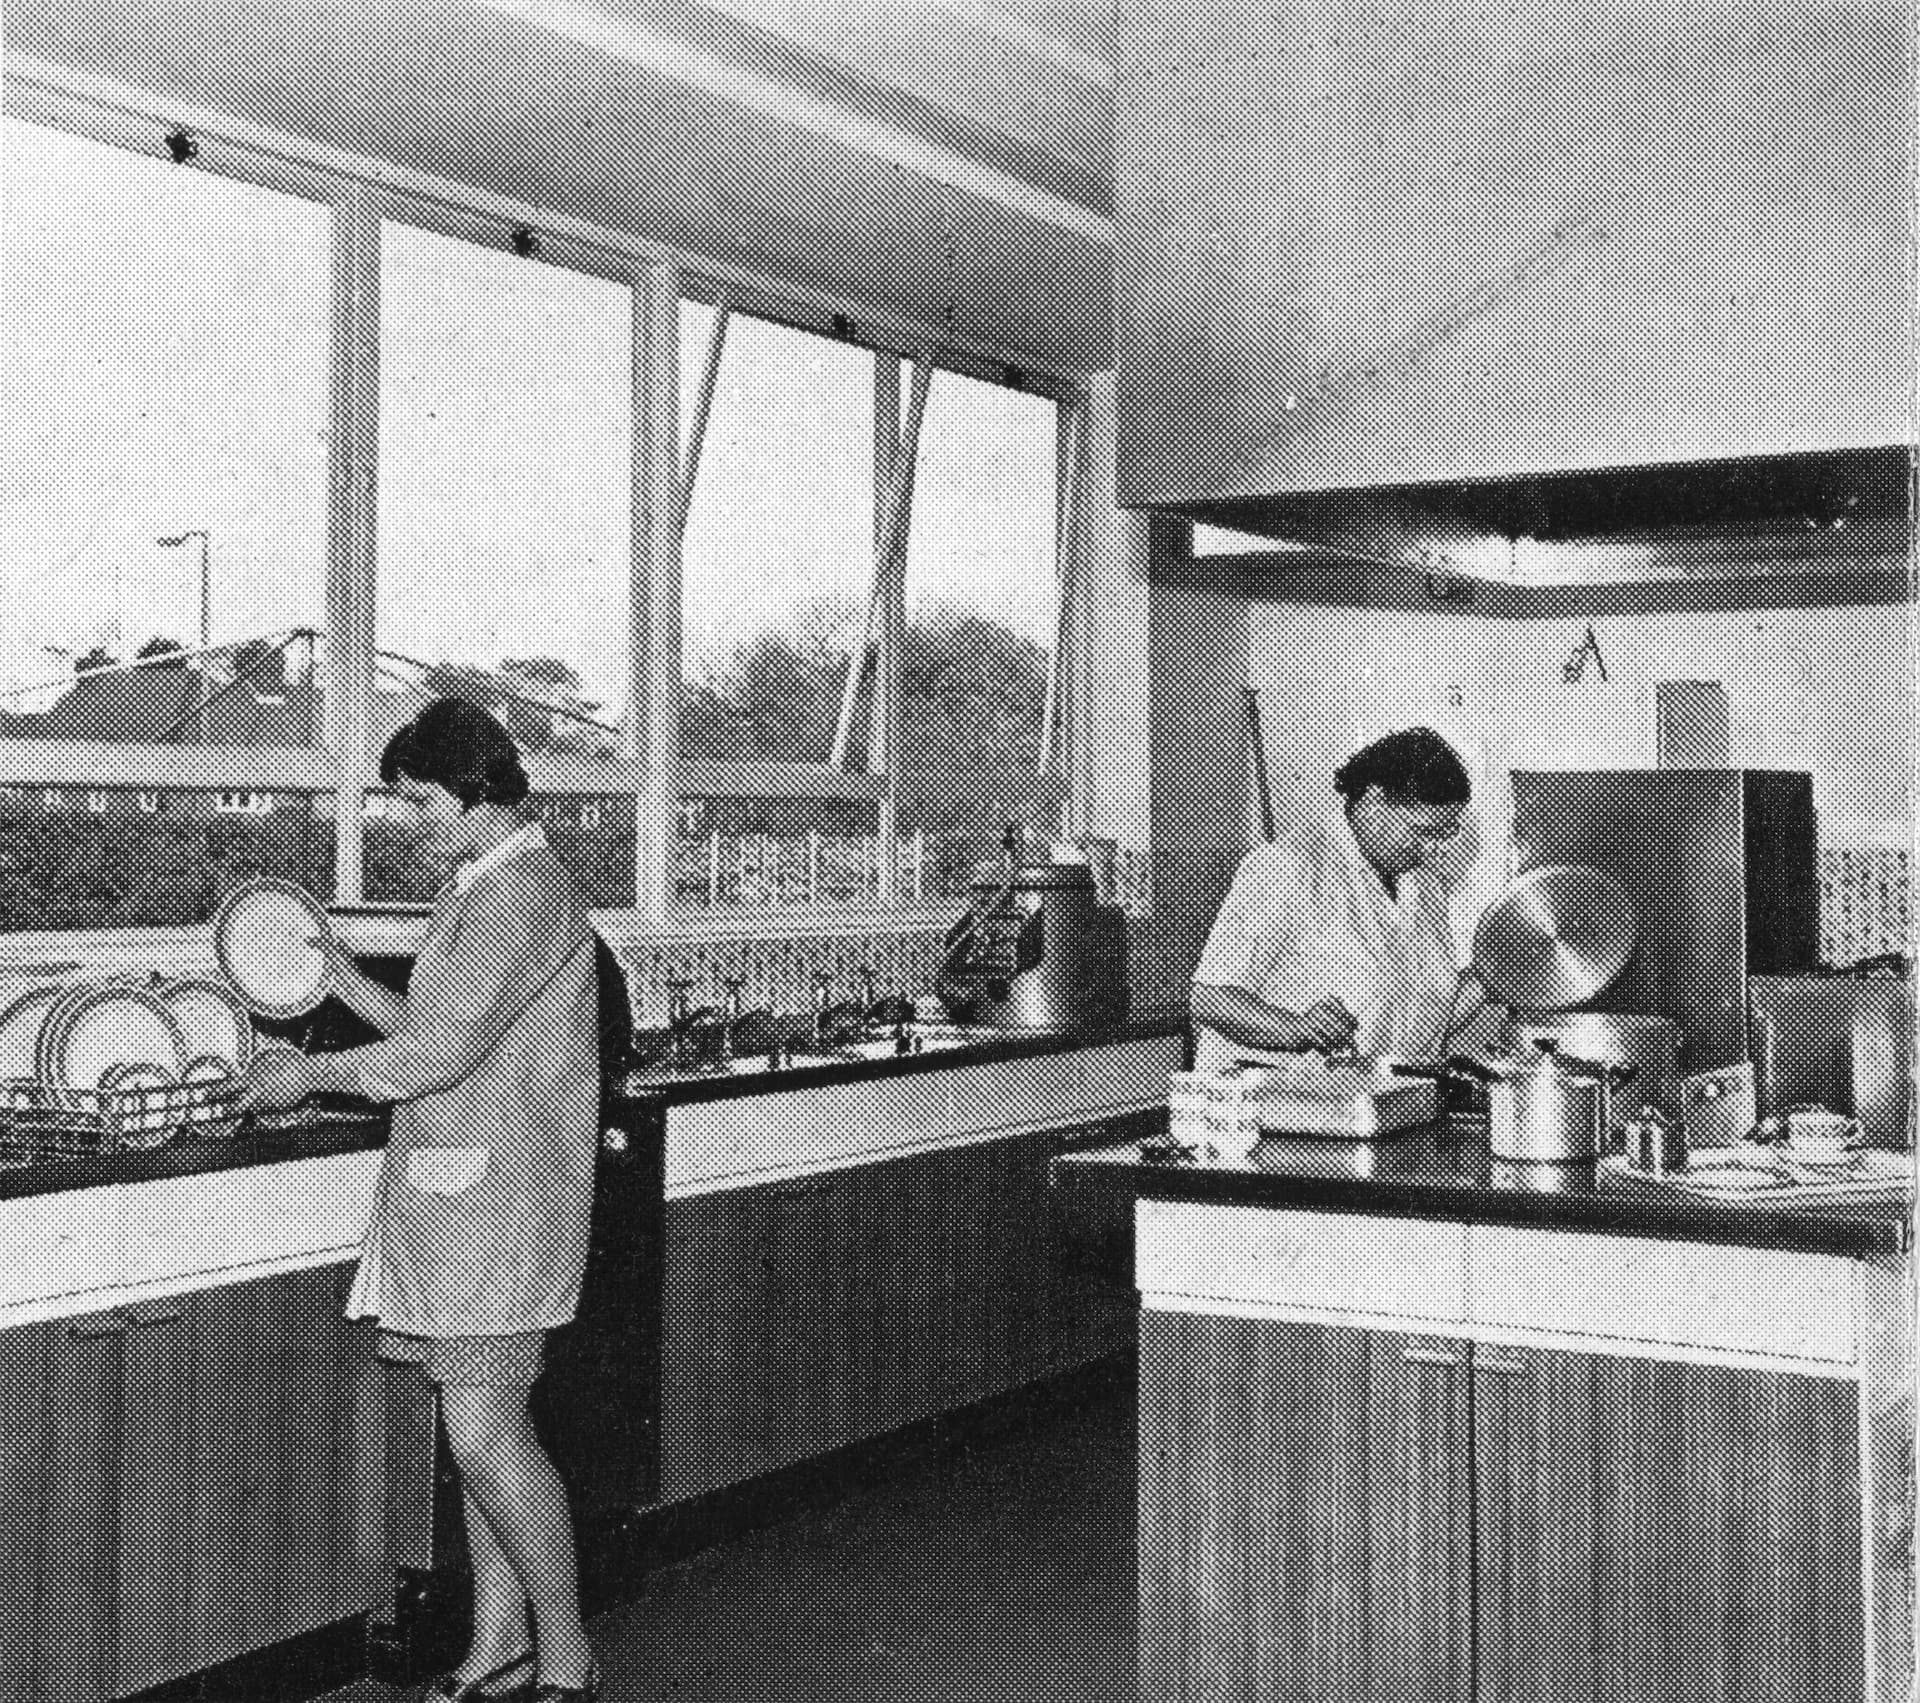 MHA care home kitchen mid 1970s